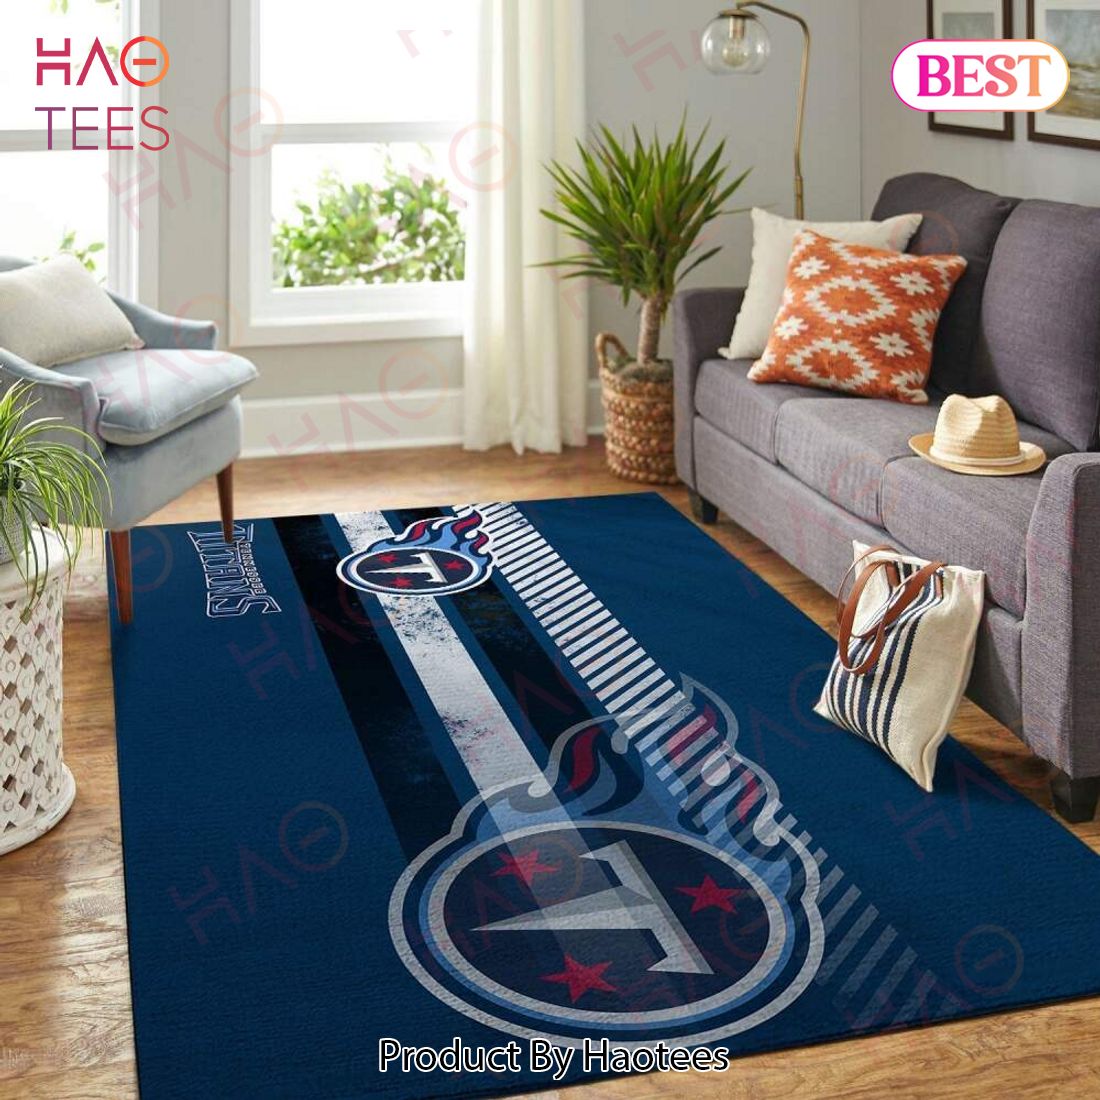 Tennessee Titans Nfl Area Rugs Living Room Carpet Team Logo Sports Rug Regtangle Carpet Floor Decor Home Decor